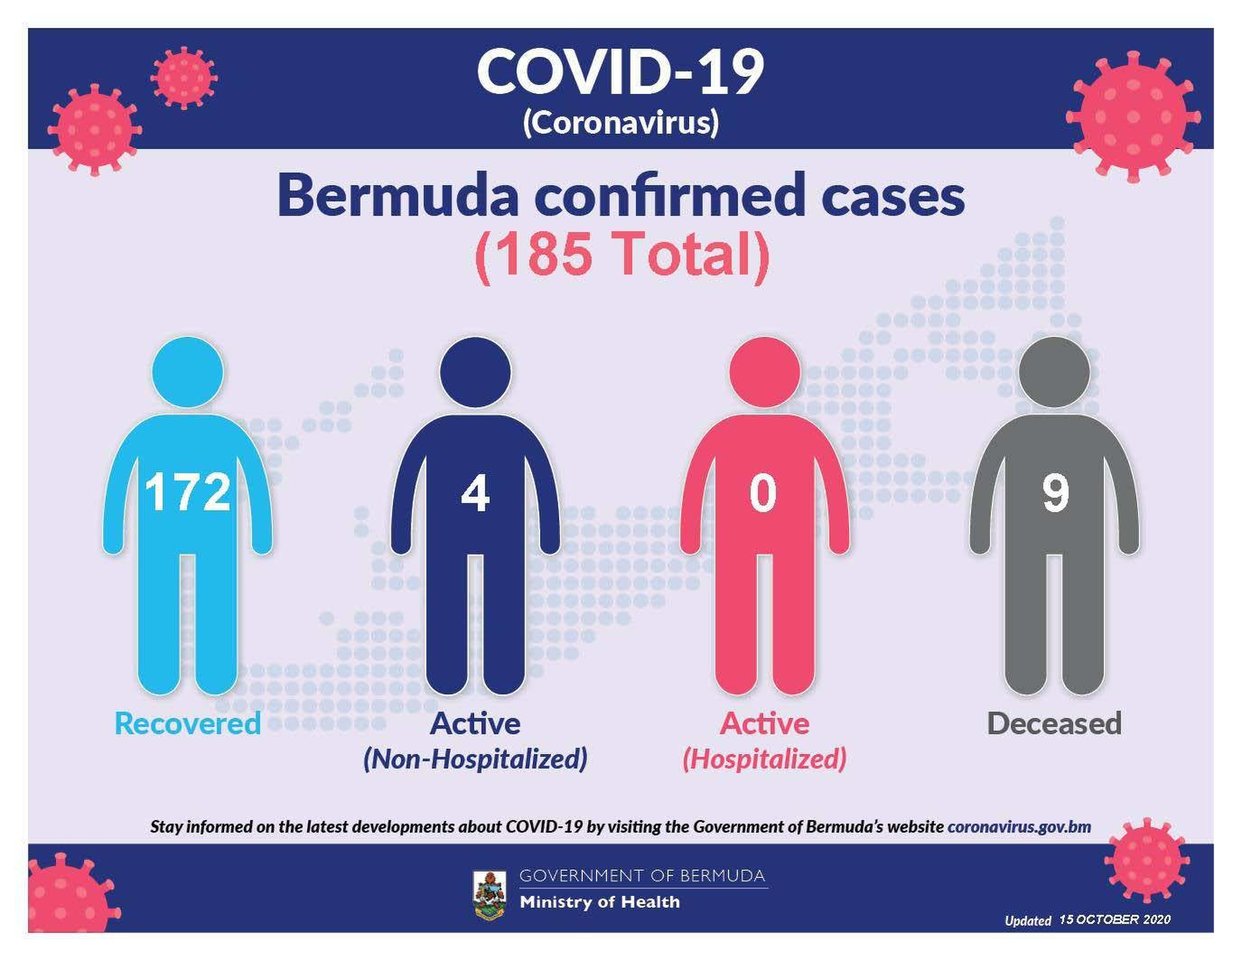 No new COVID-19 cases reported in Bermuda, 16 October